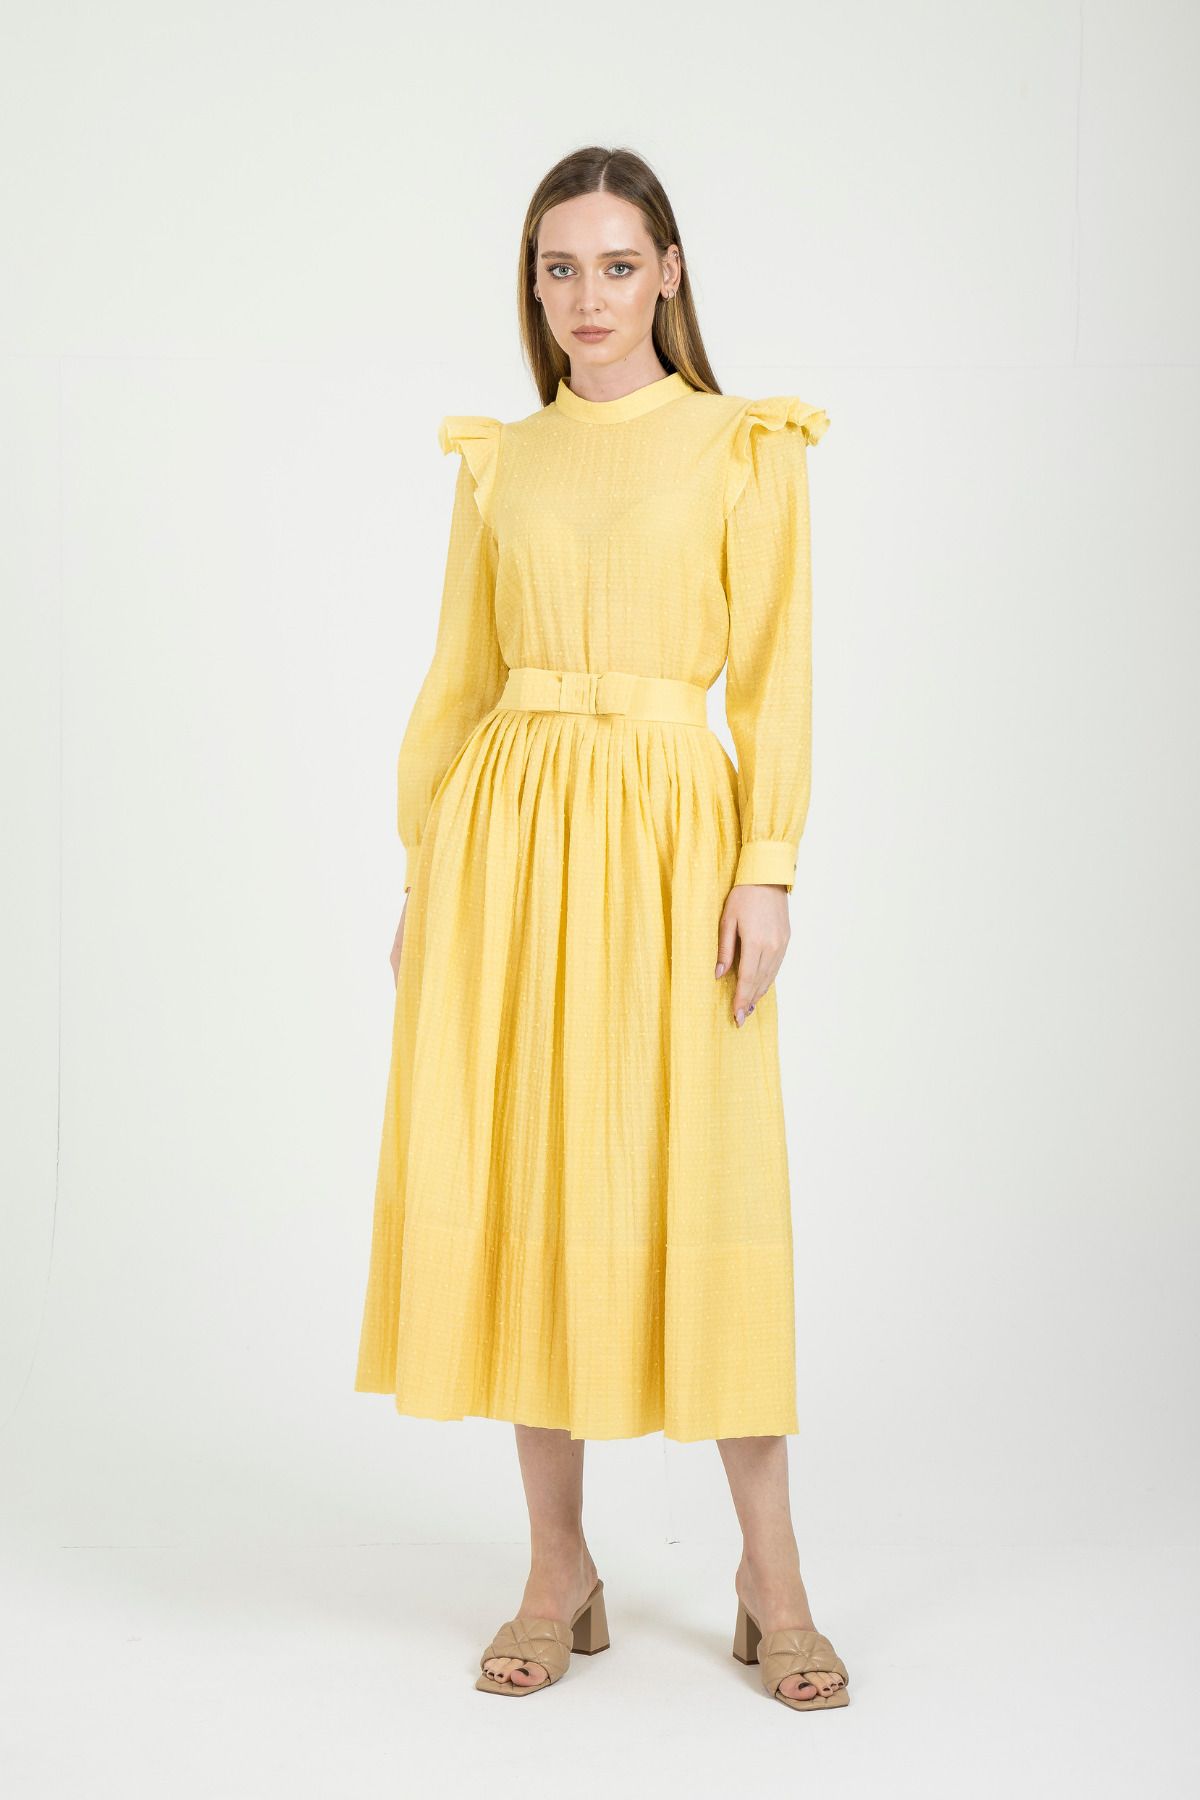 Mimya Sarı Pili Etekli Pamuklu Elbise 2528